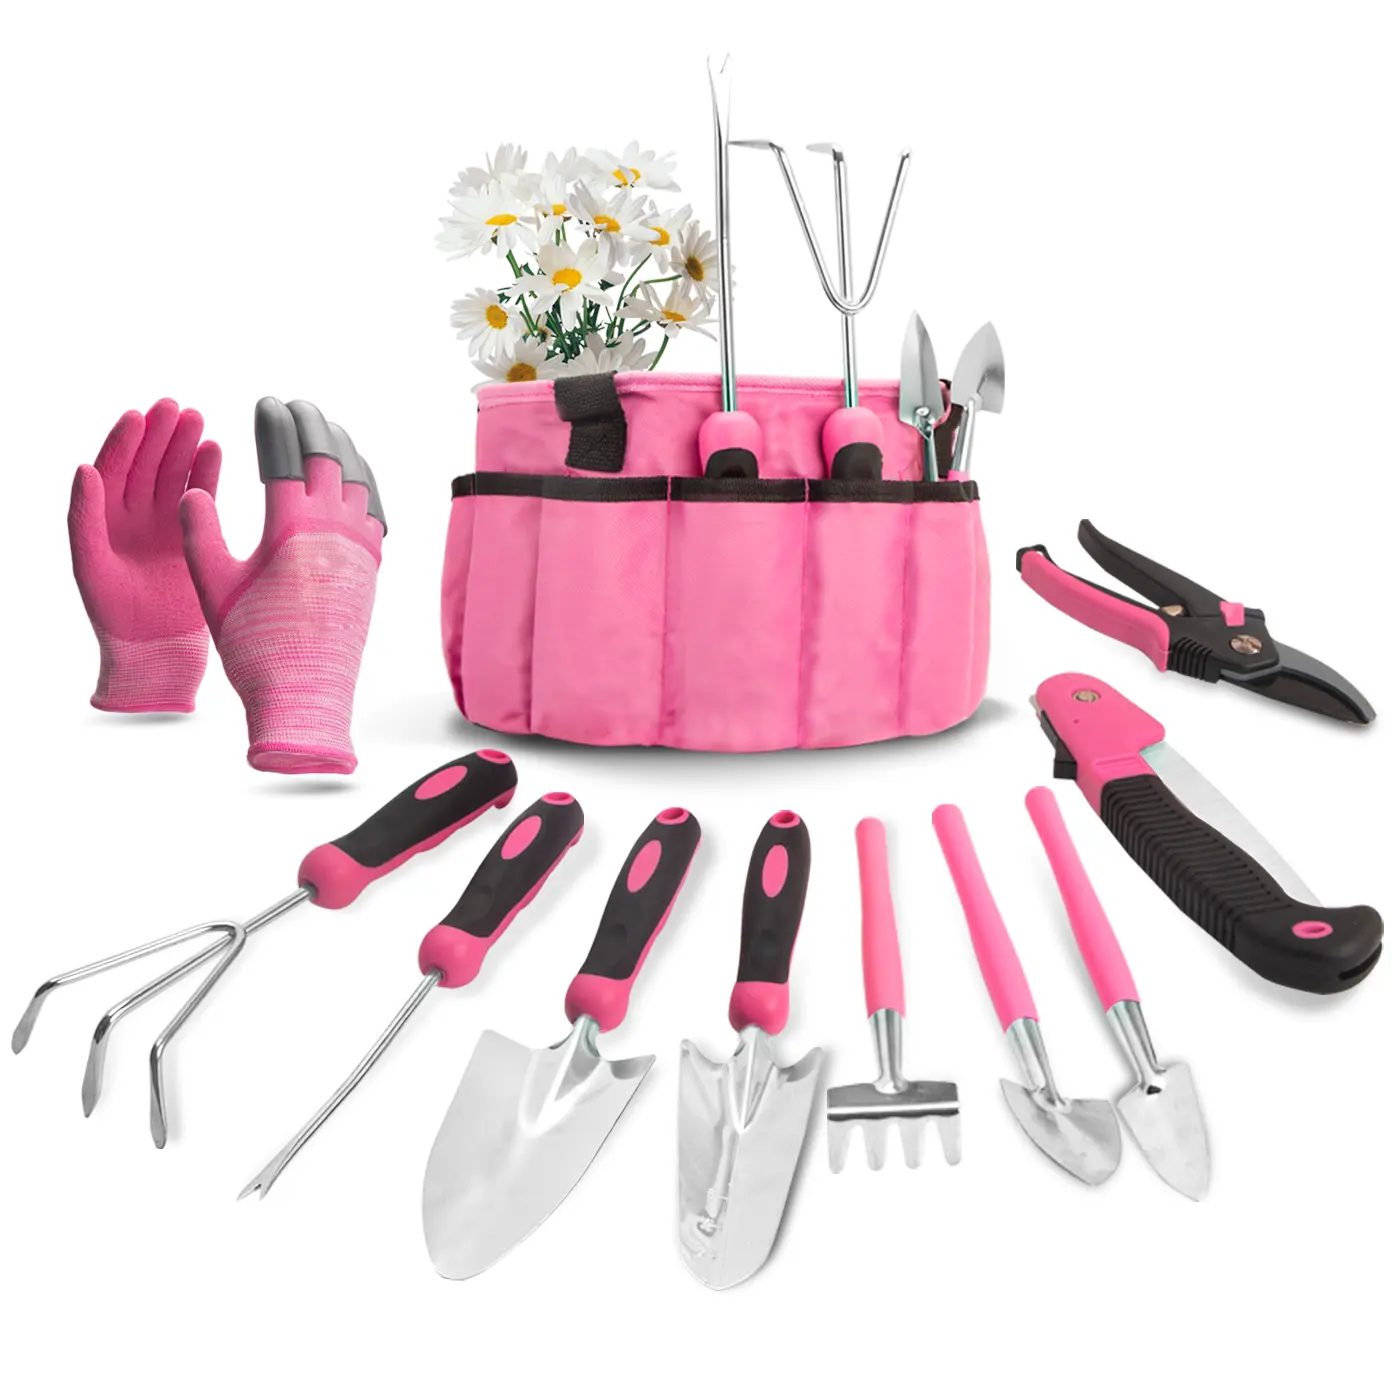 11 Piece Gardening Tool Set weeder fork rake trowel digging with Bag heavy duty for women Garden Tool Set pink set